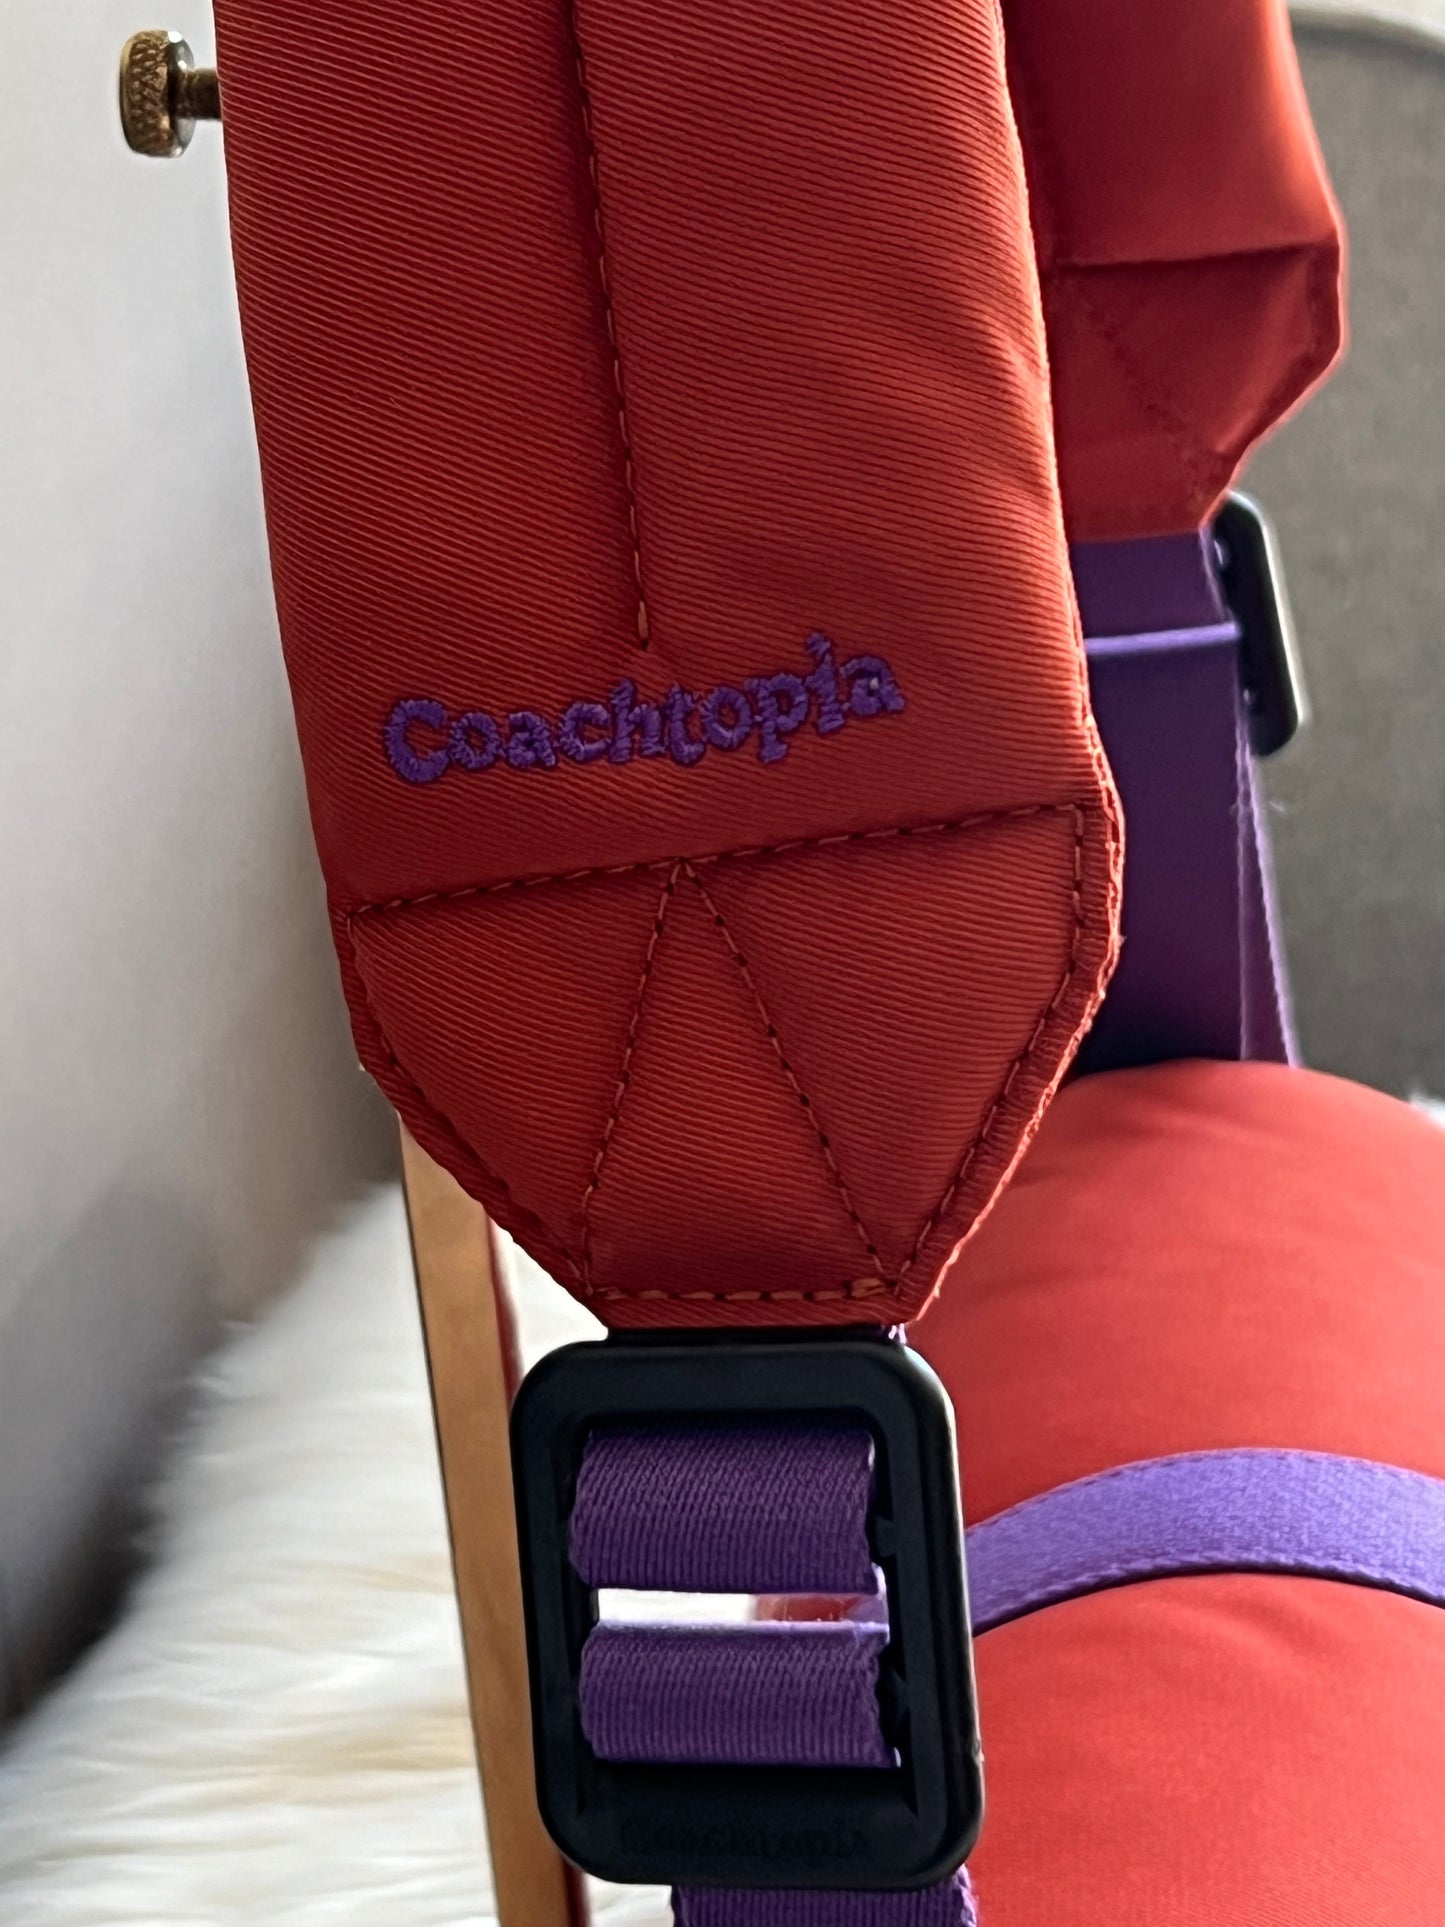 Coachtopia Loop Puffy Wavy Dinky Bag